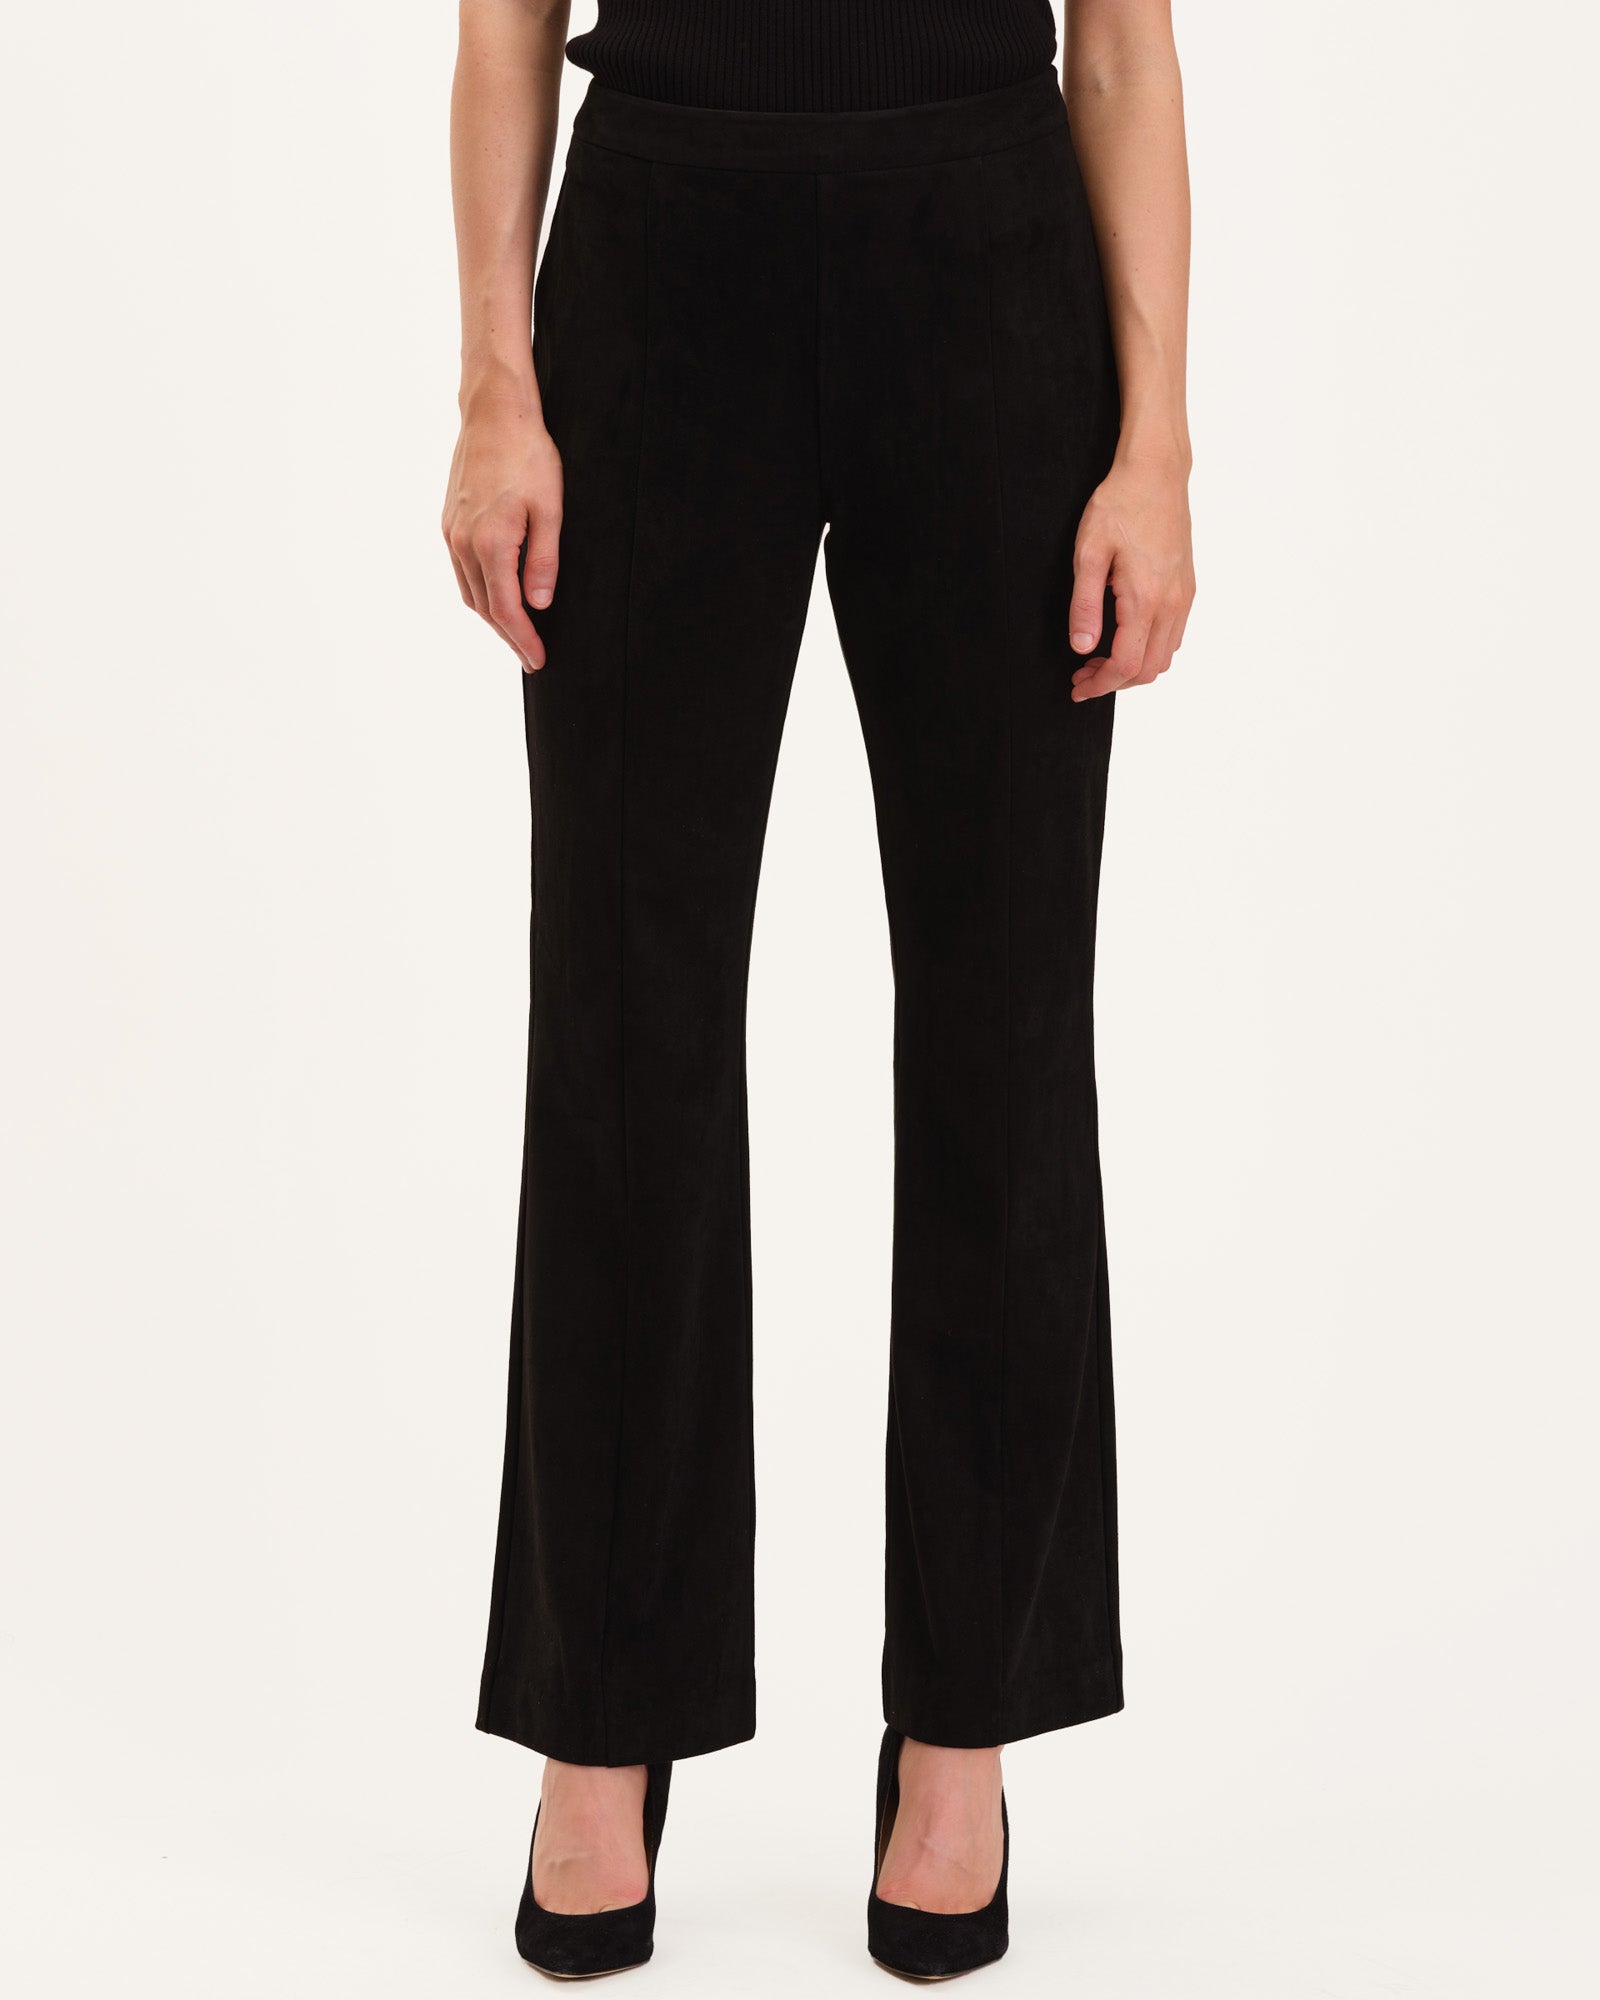 womens side zip pants | Nordstrom